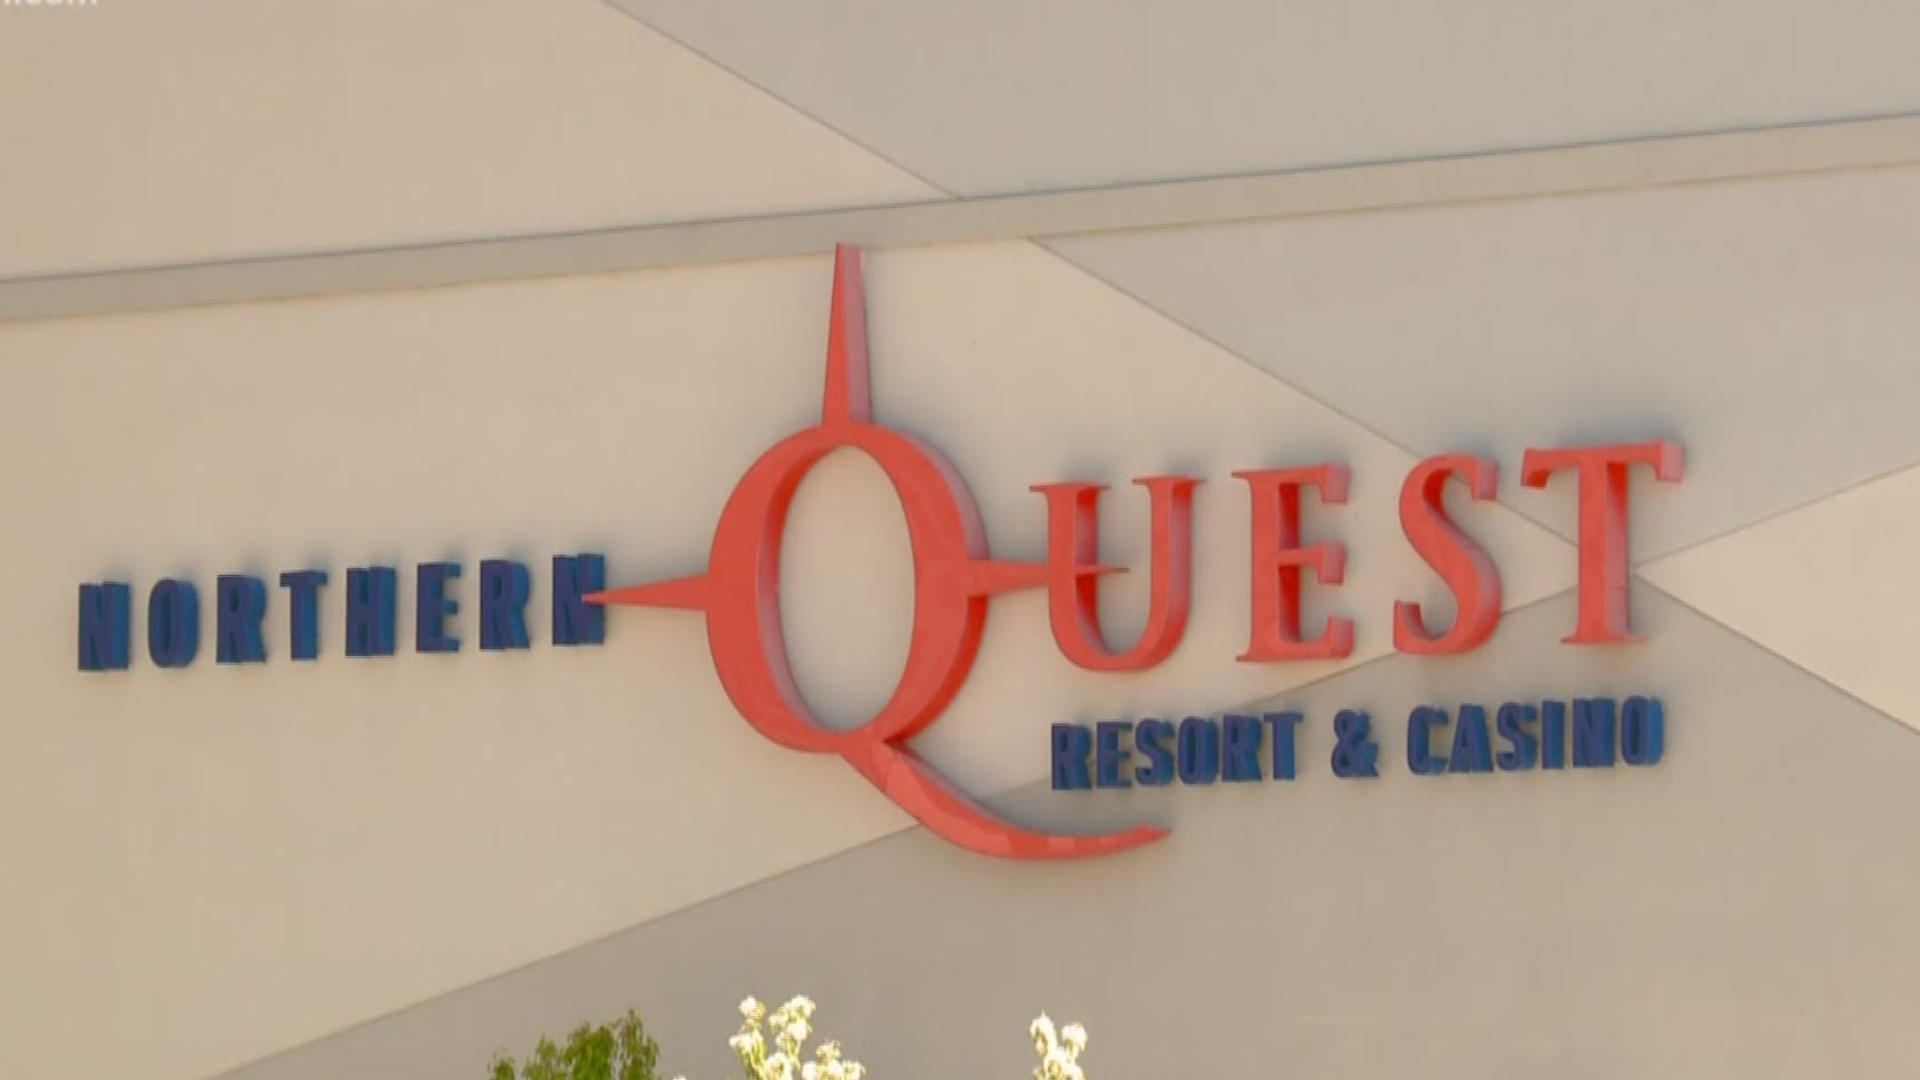 northern quest casino employee benefits